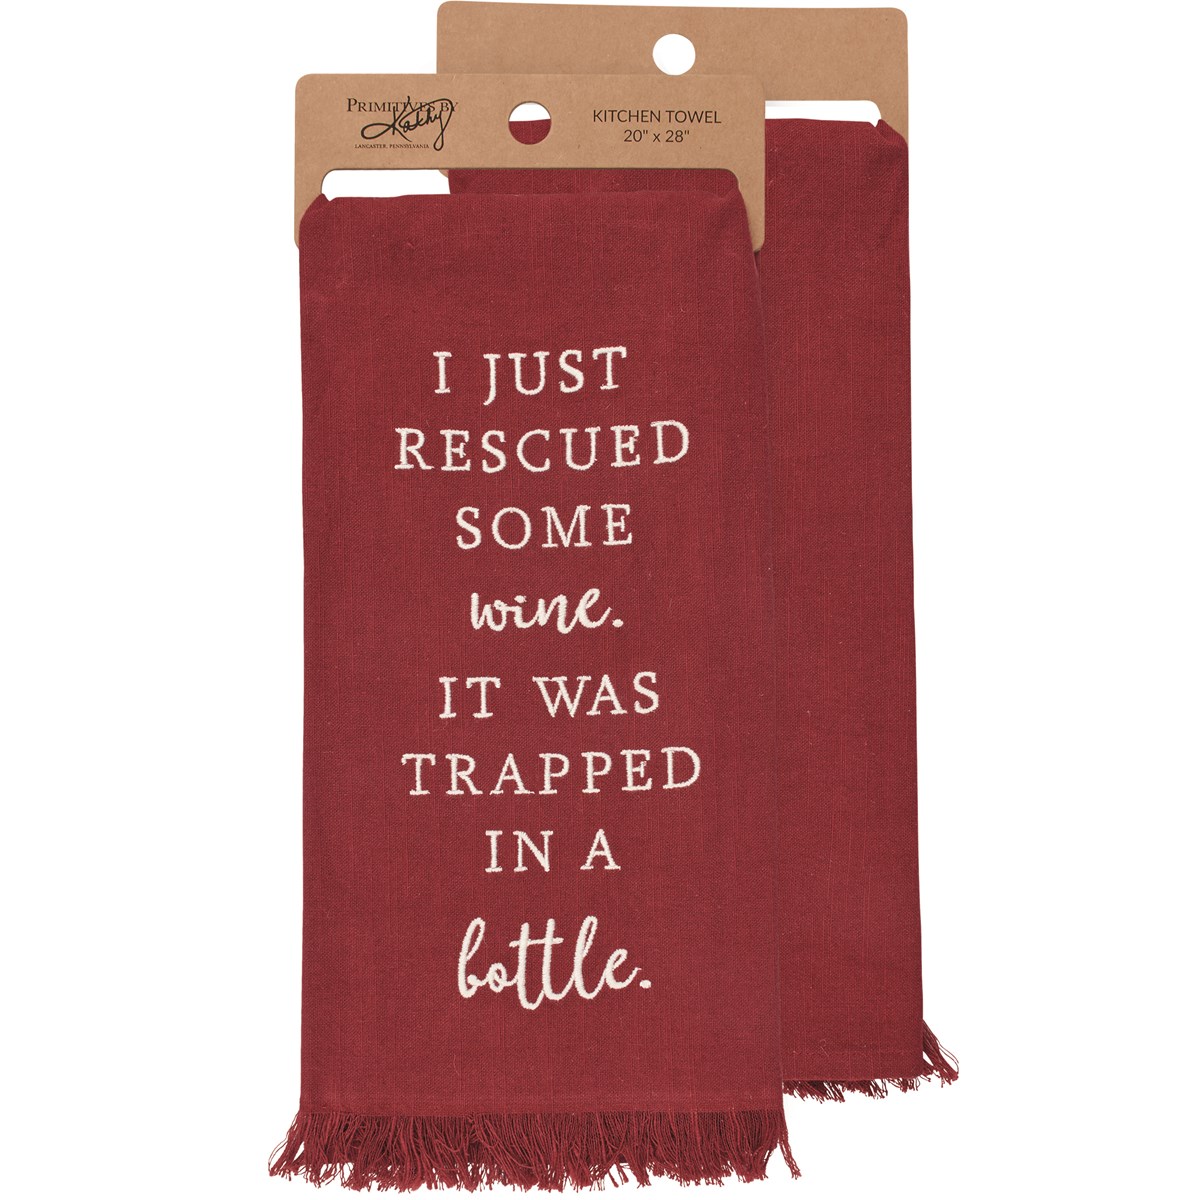 Rescued Wine Kitchen Towel - Cotton